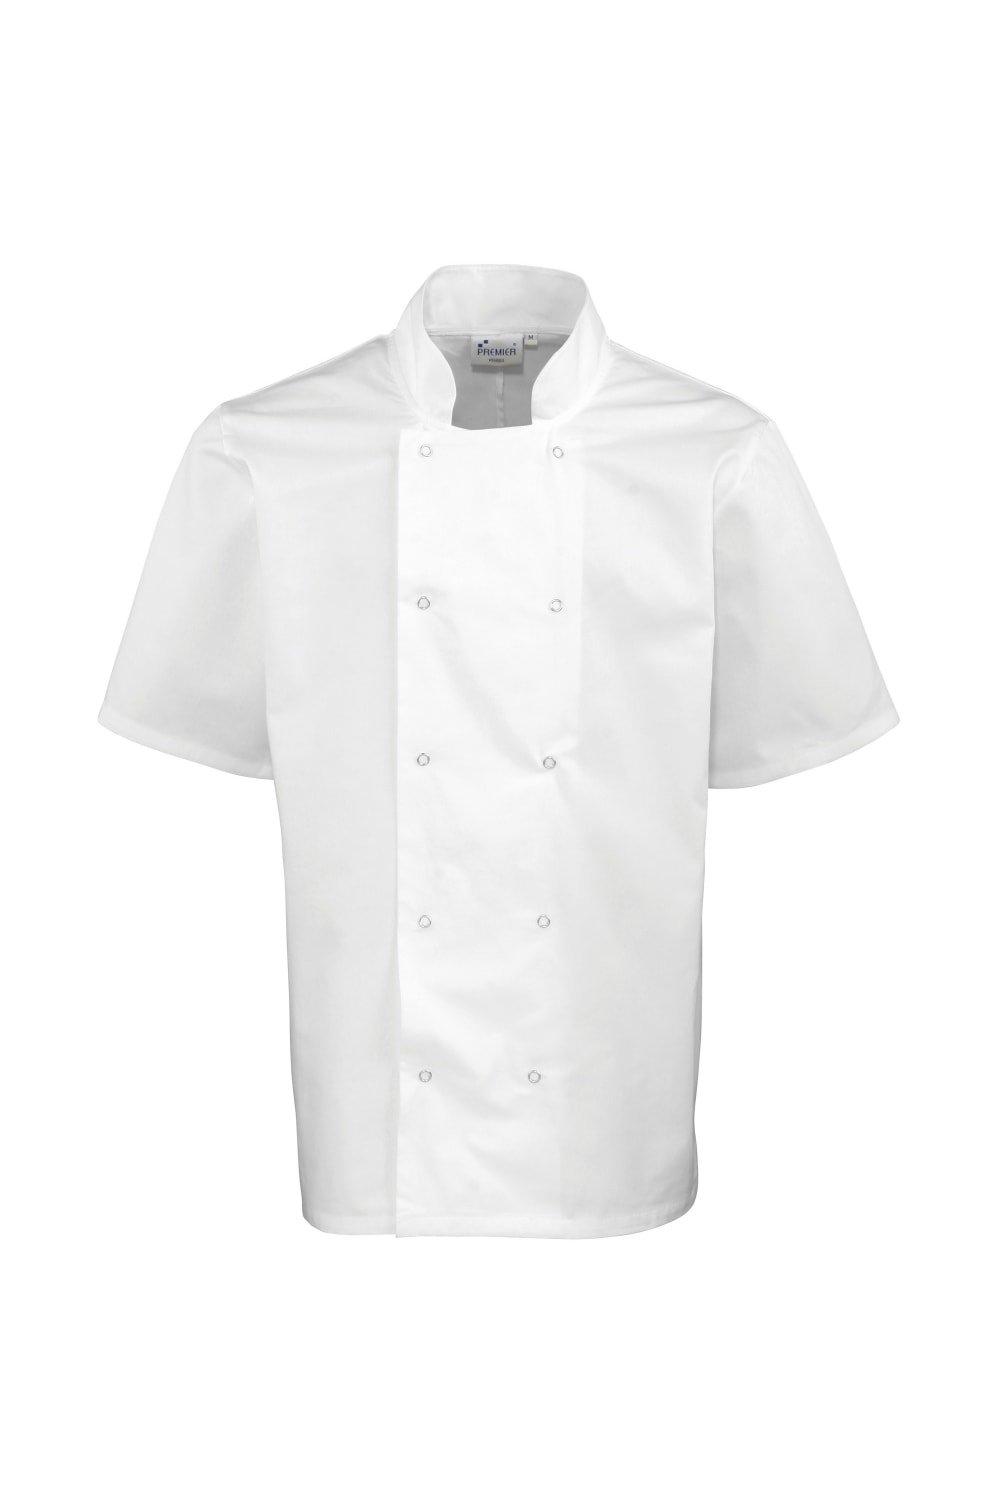 Куртка Chefs с короткими рукавами и заклепками спереди, комплект из 2 шт. Premier, белый